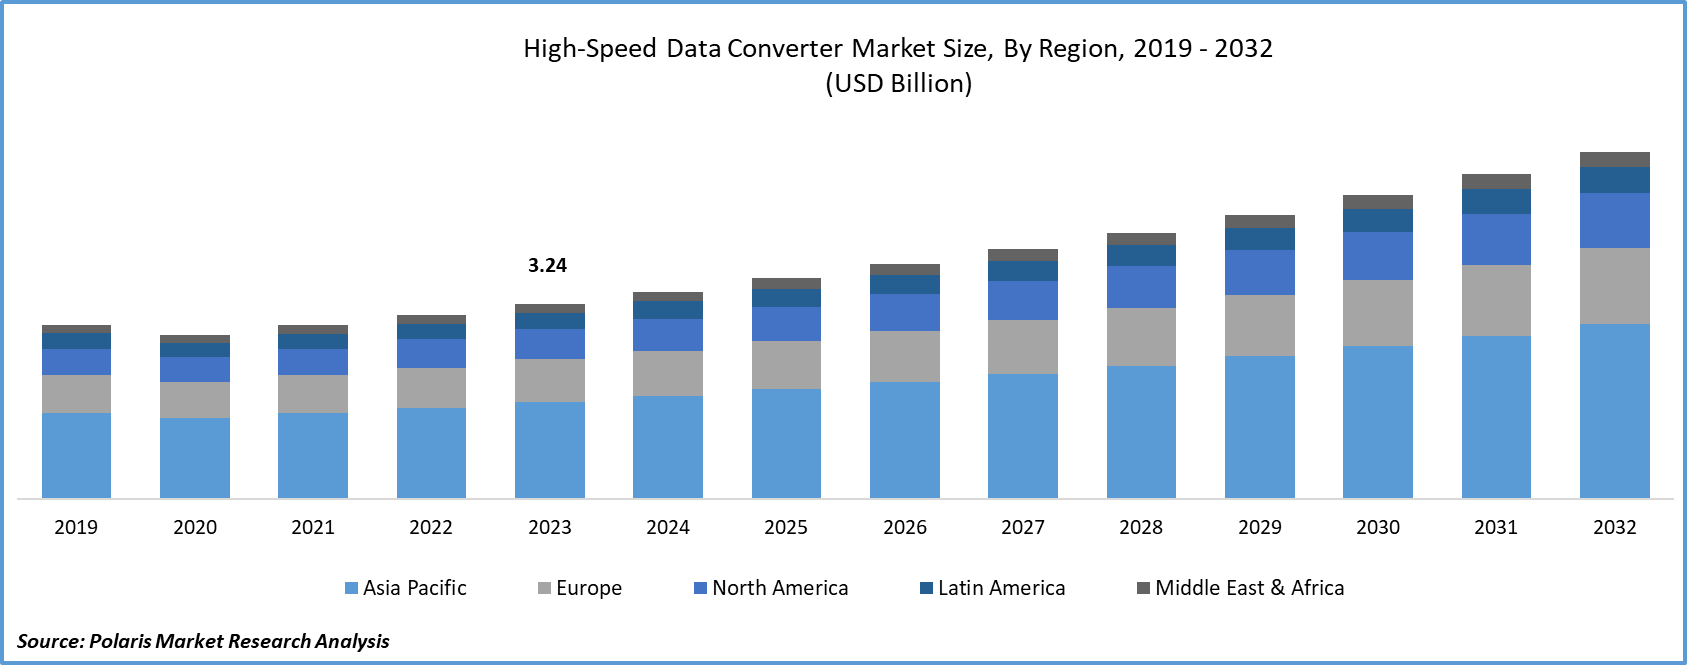 High-Speed Data Converter Market Size